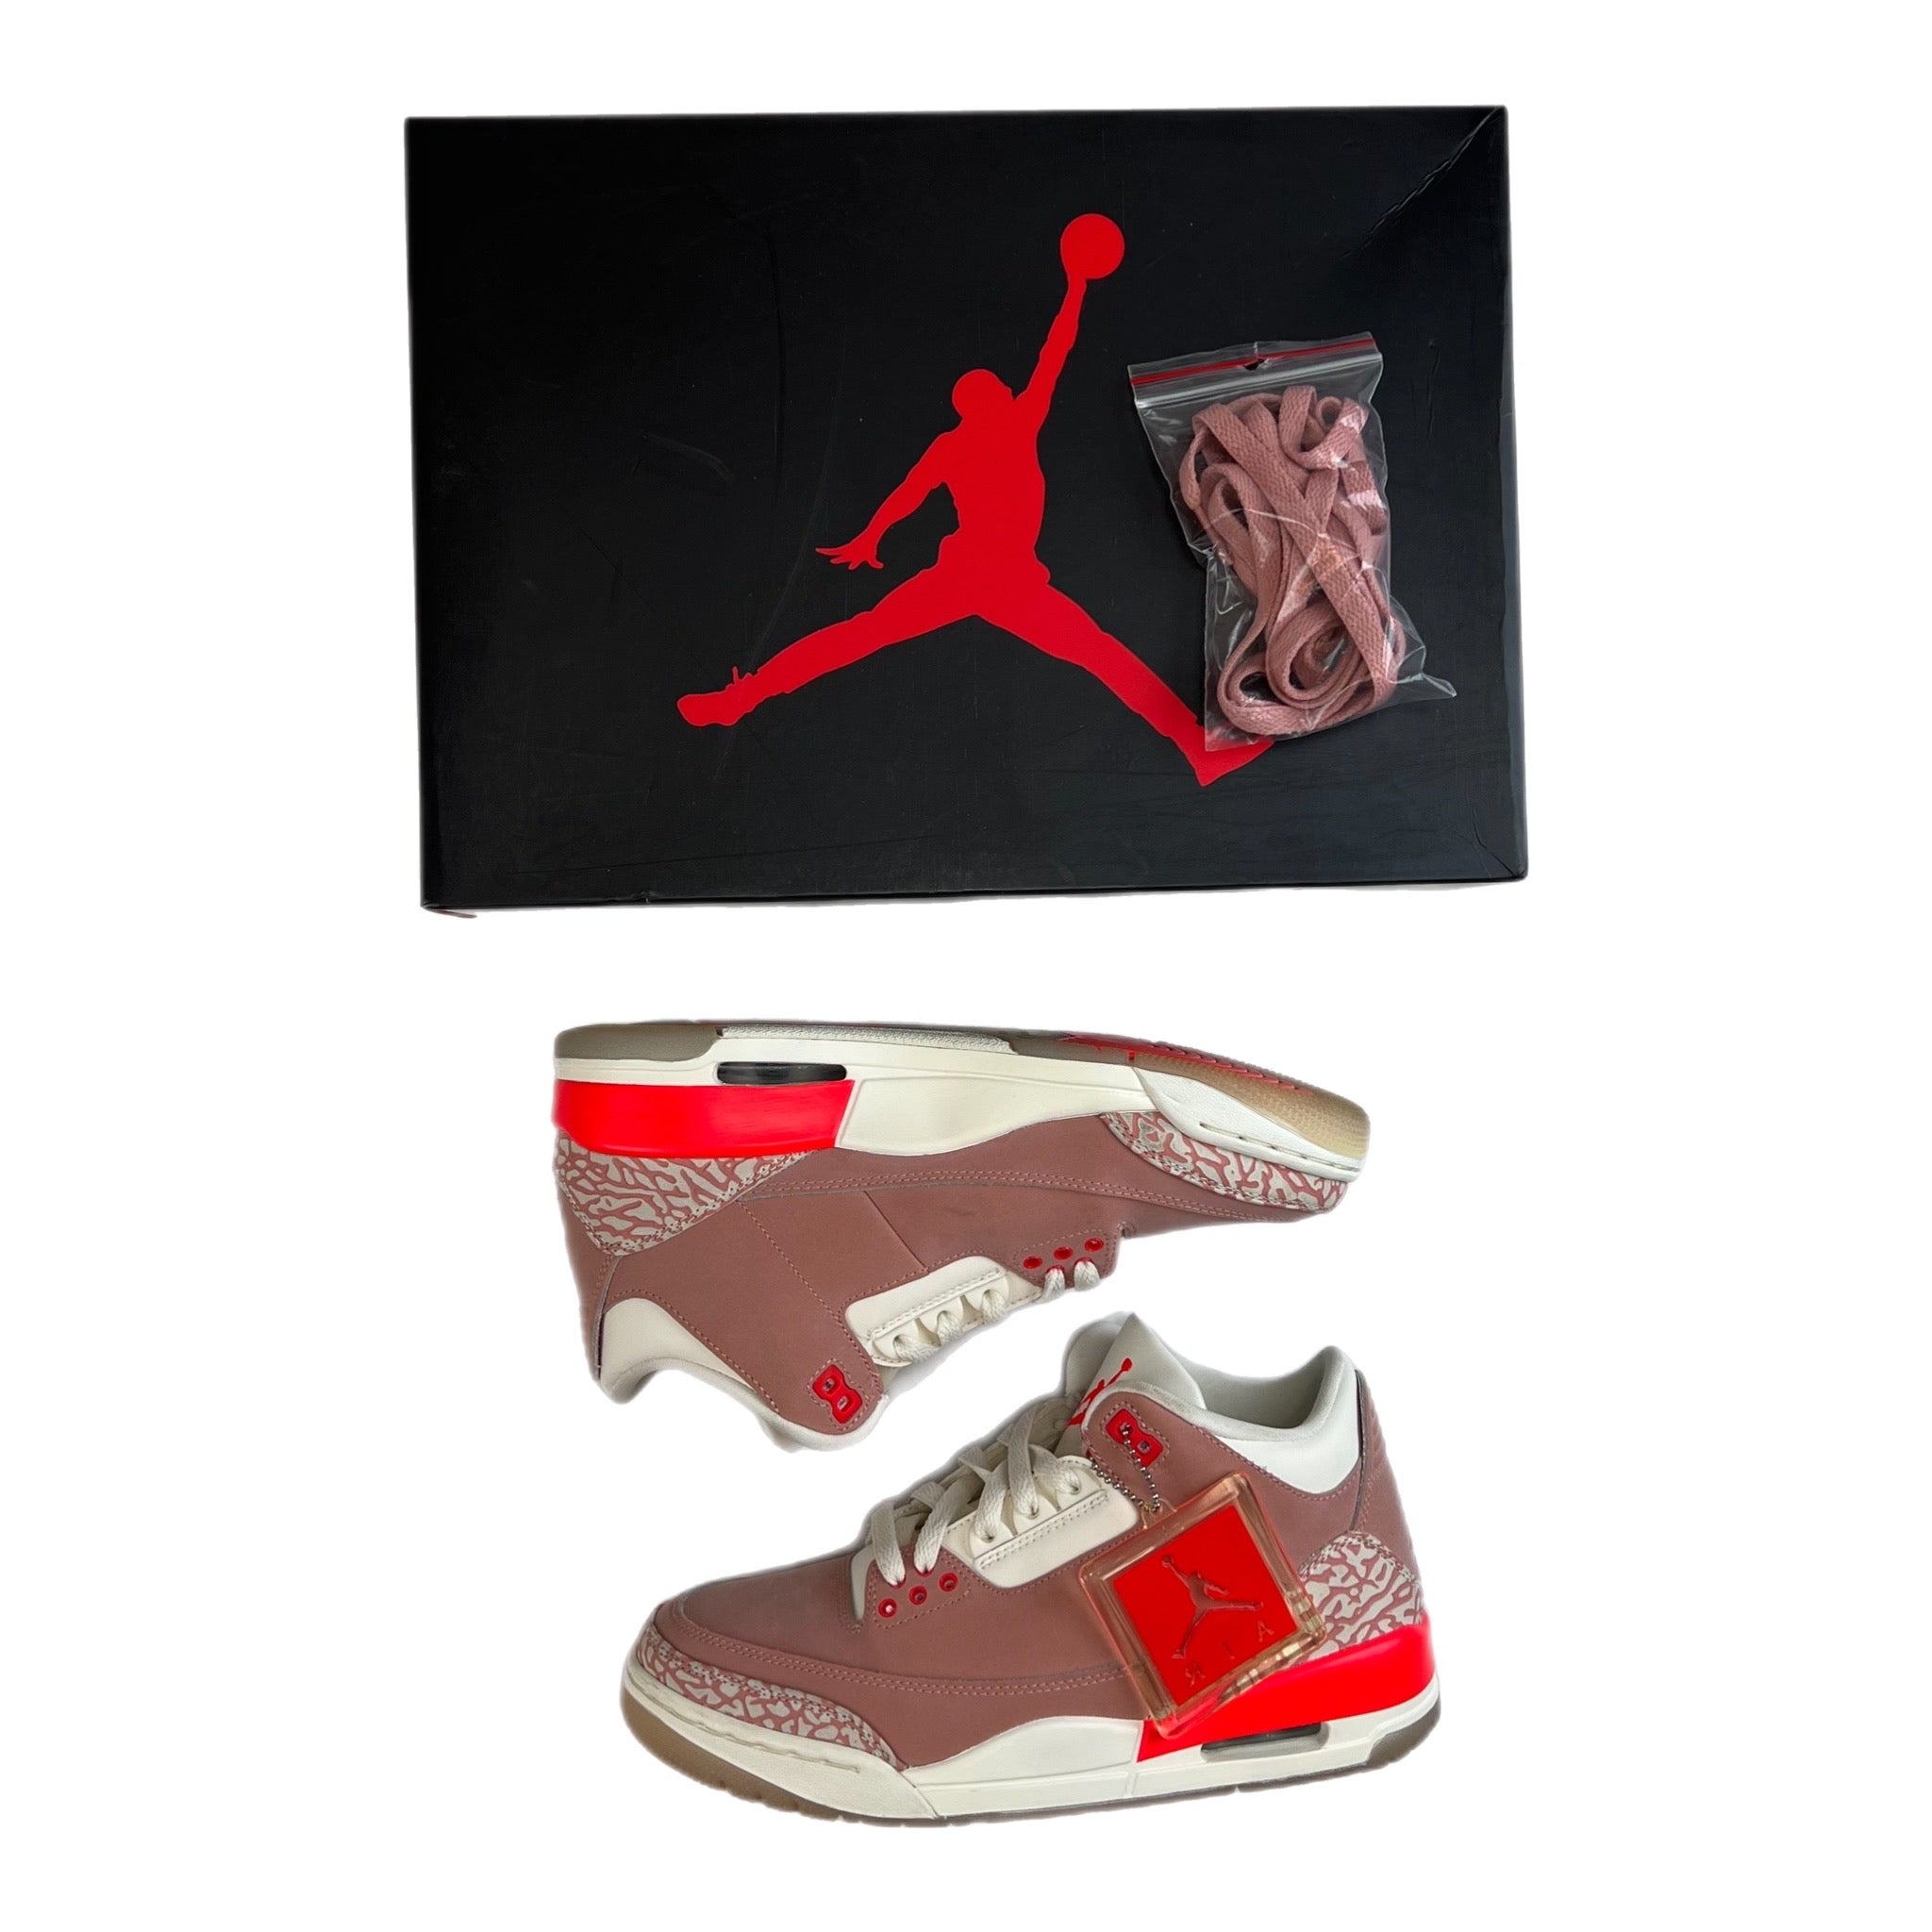 Jordan 3 Rust Pink (Used)